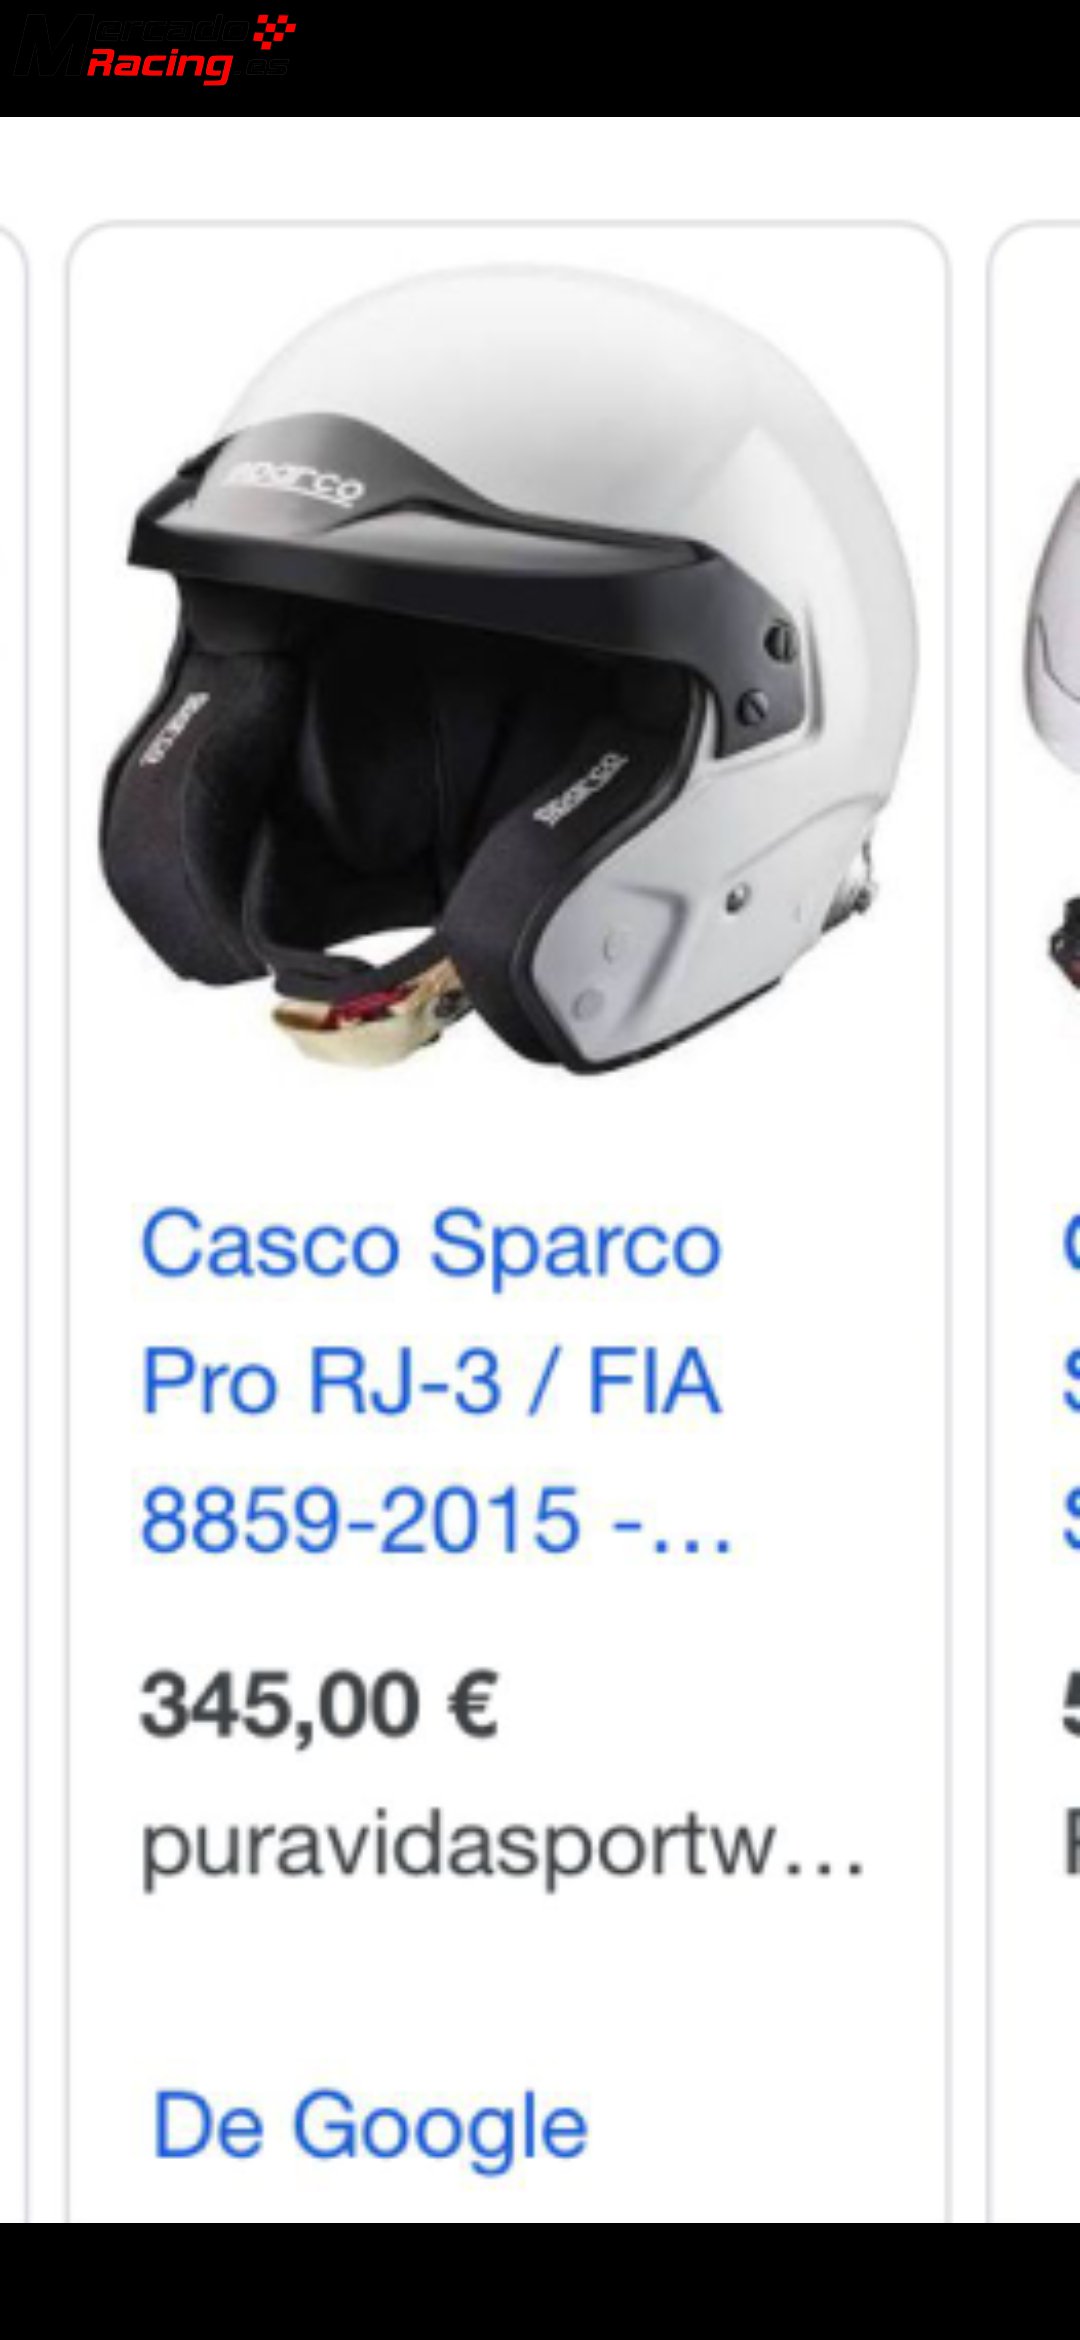 Se vende casco sparco pro rj-3